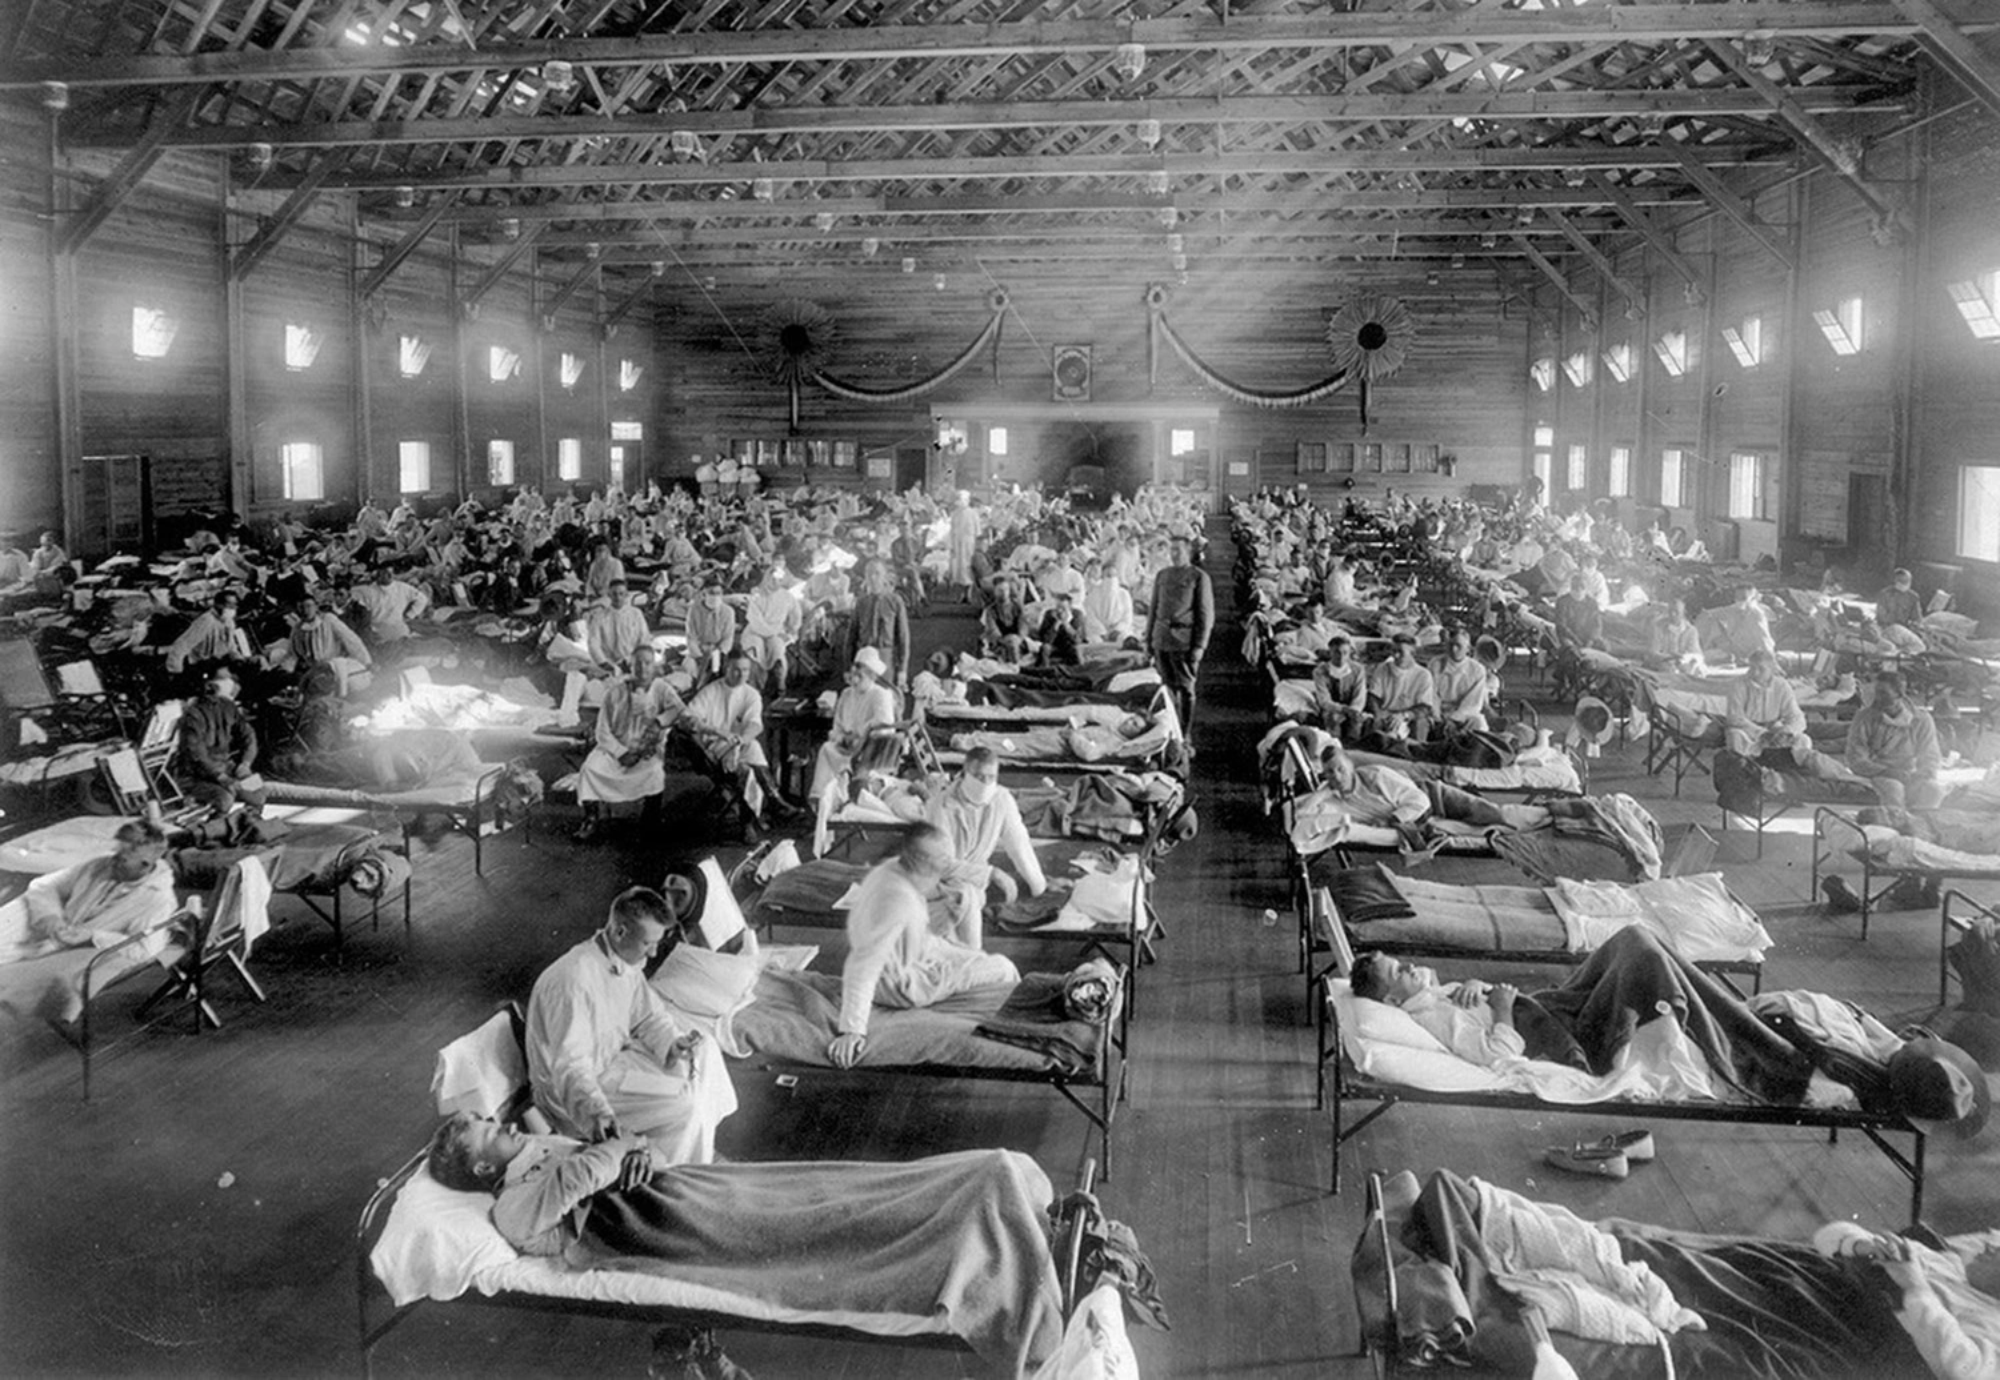 1918 flu